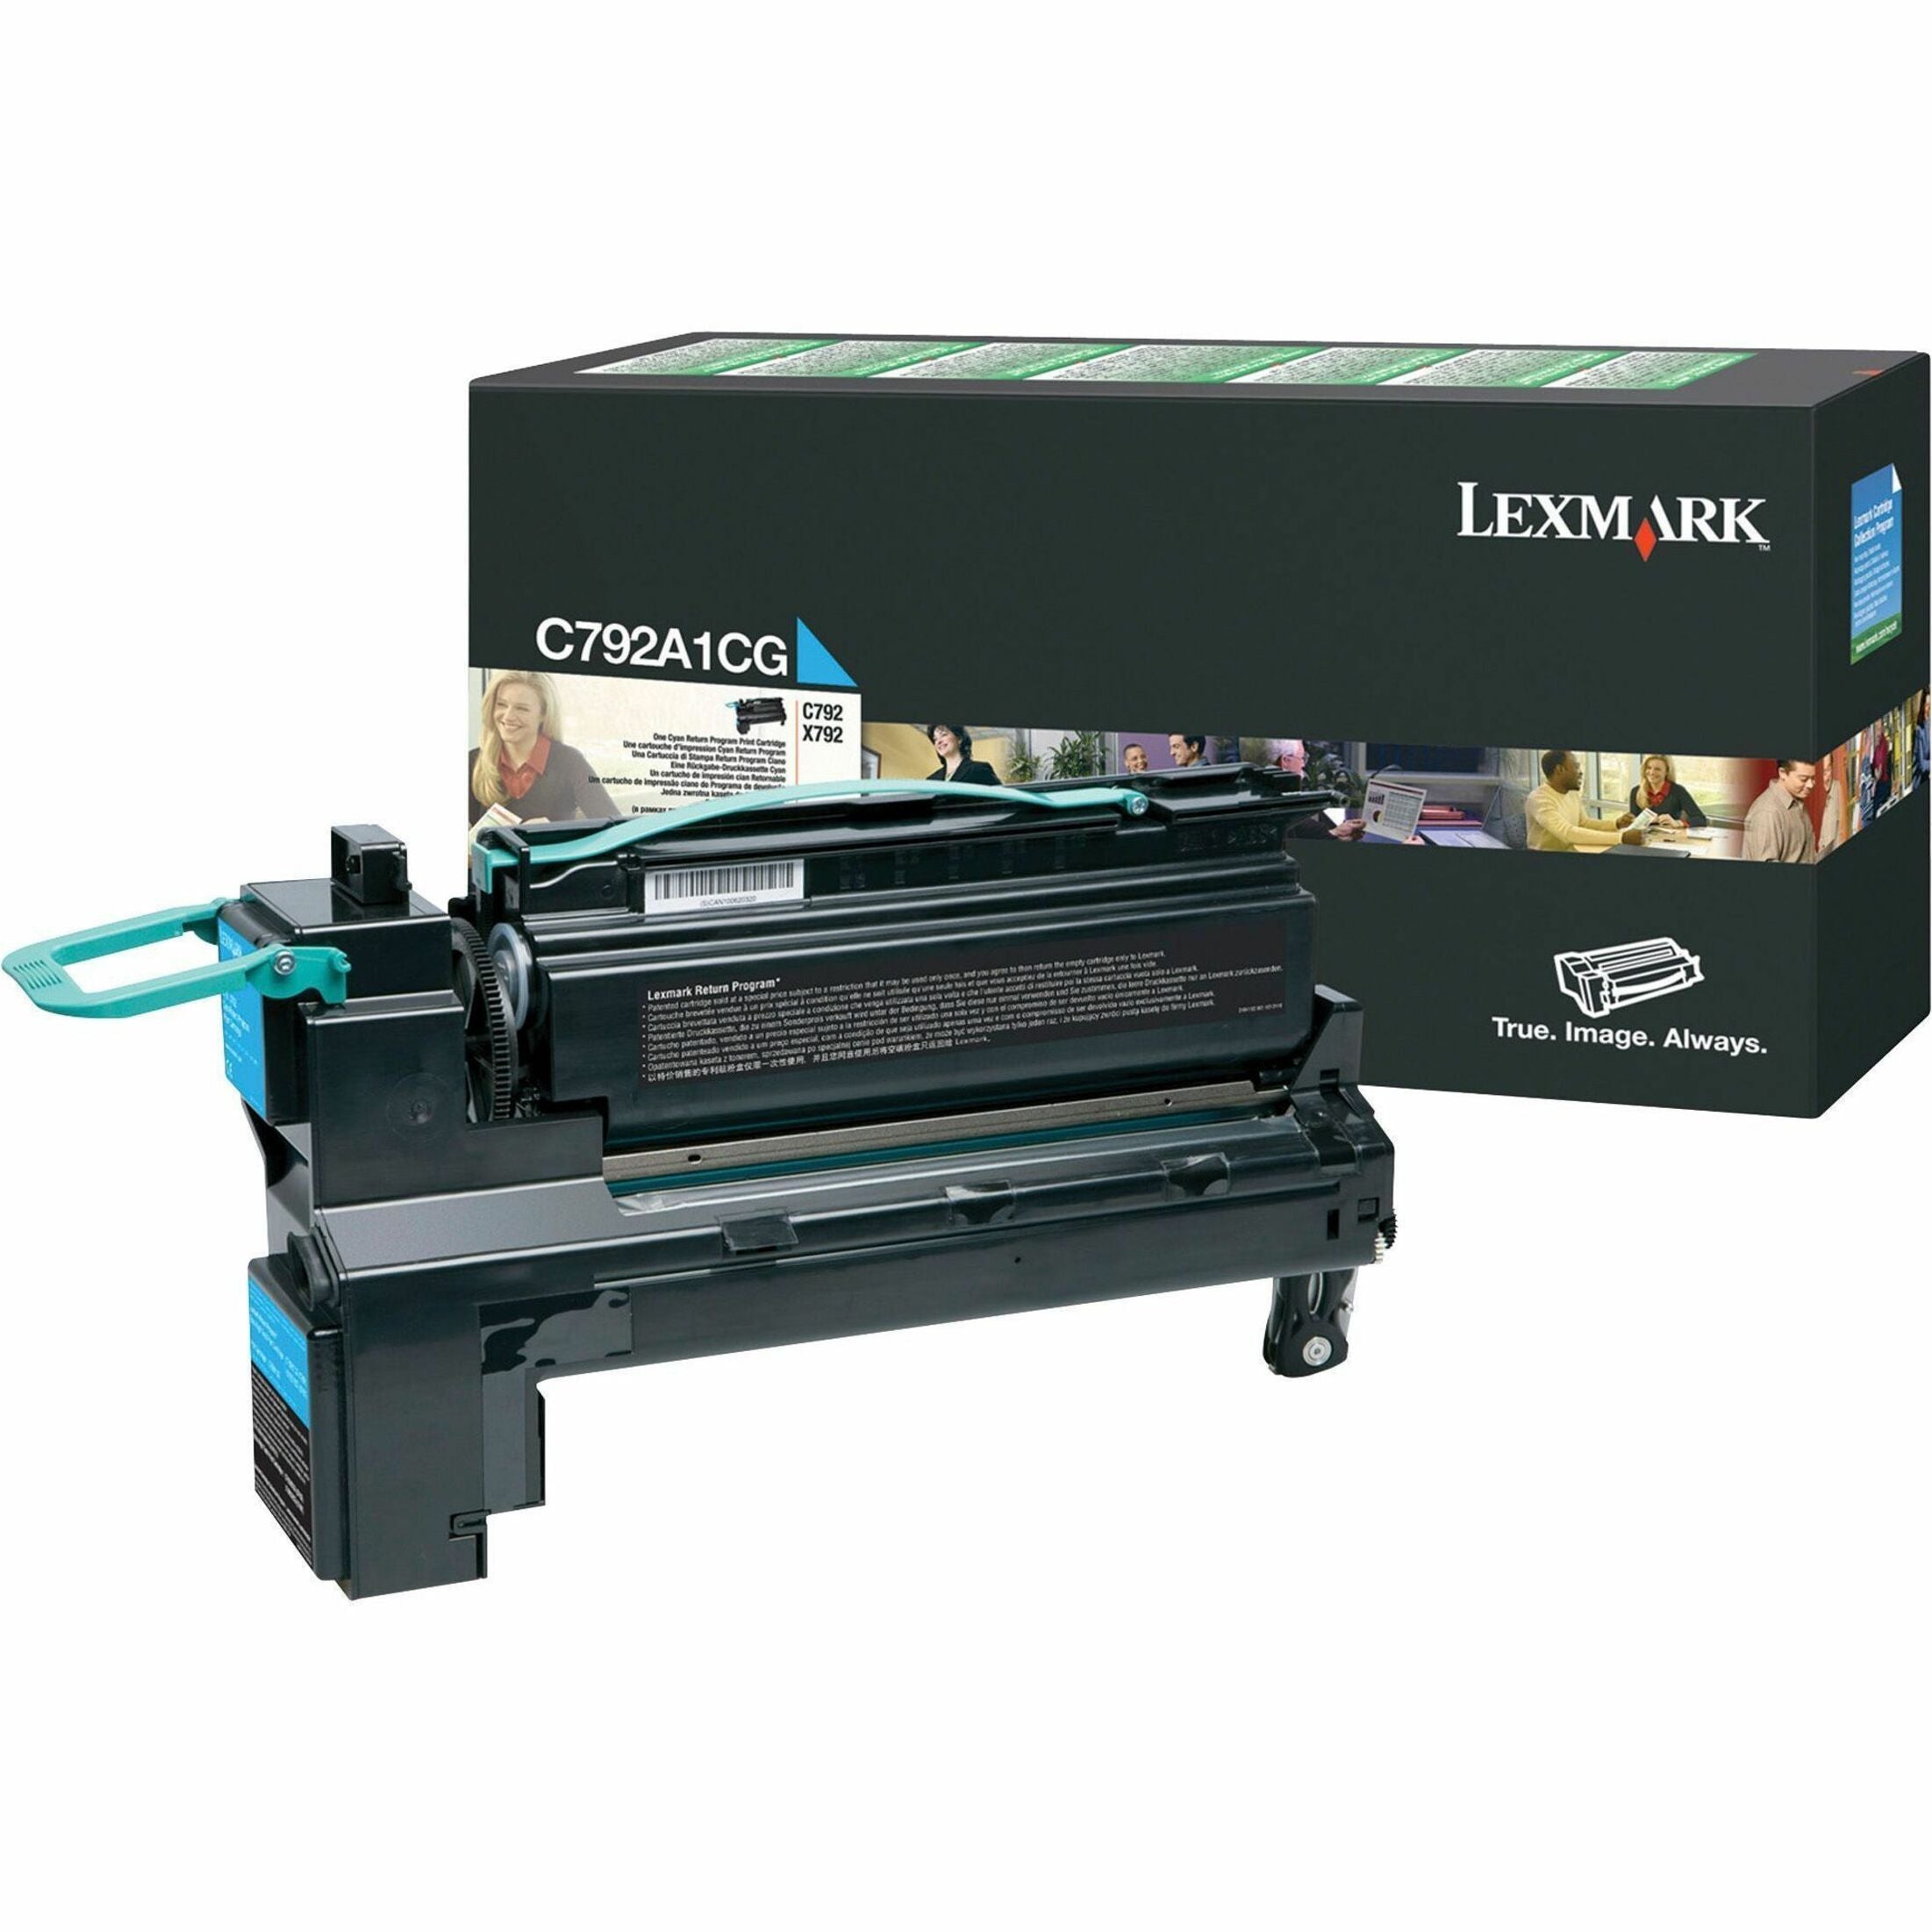 Lexmark C792A1CG Toner Cartridge Cyan - Laser, 6000 Pages